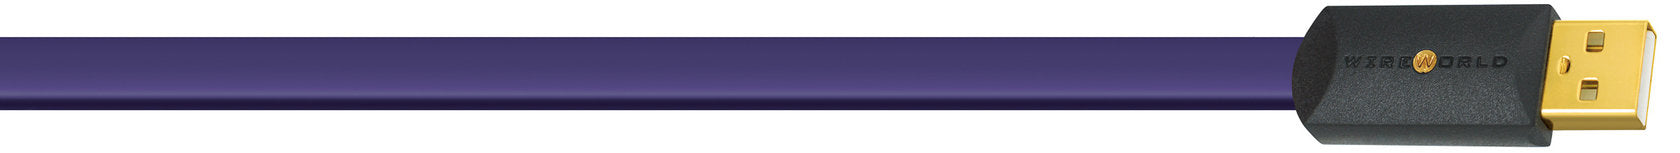 WireWorld Ultraviolet 8 USB 3.0, A -&gt; B, 1 m